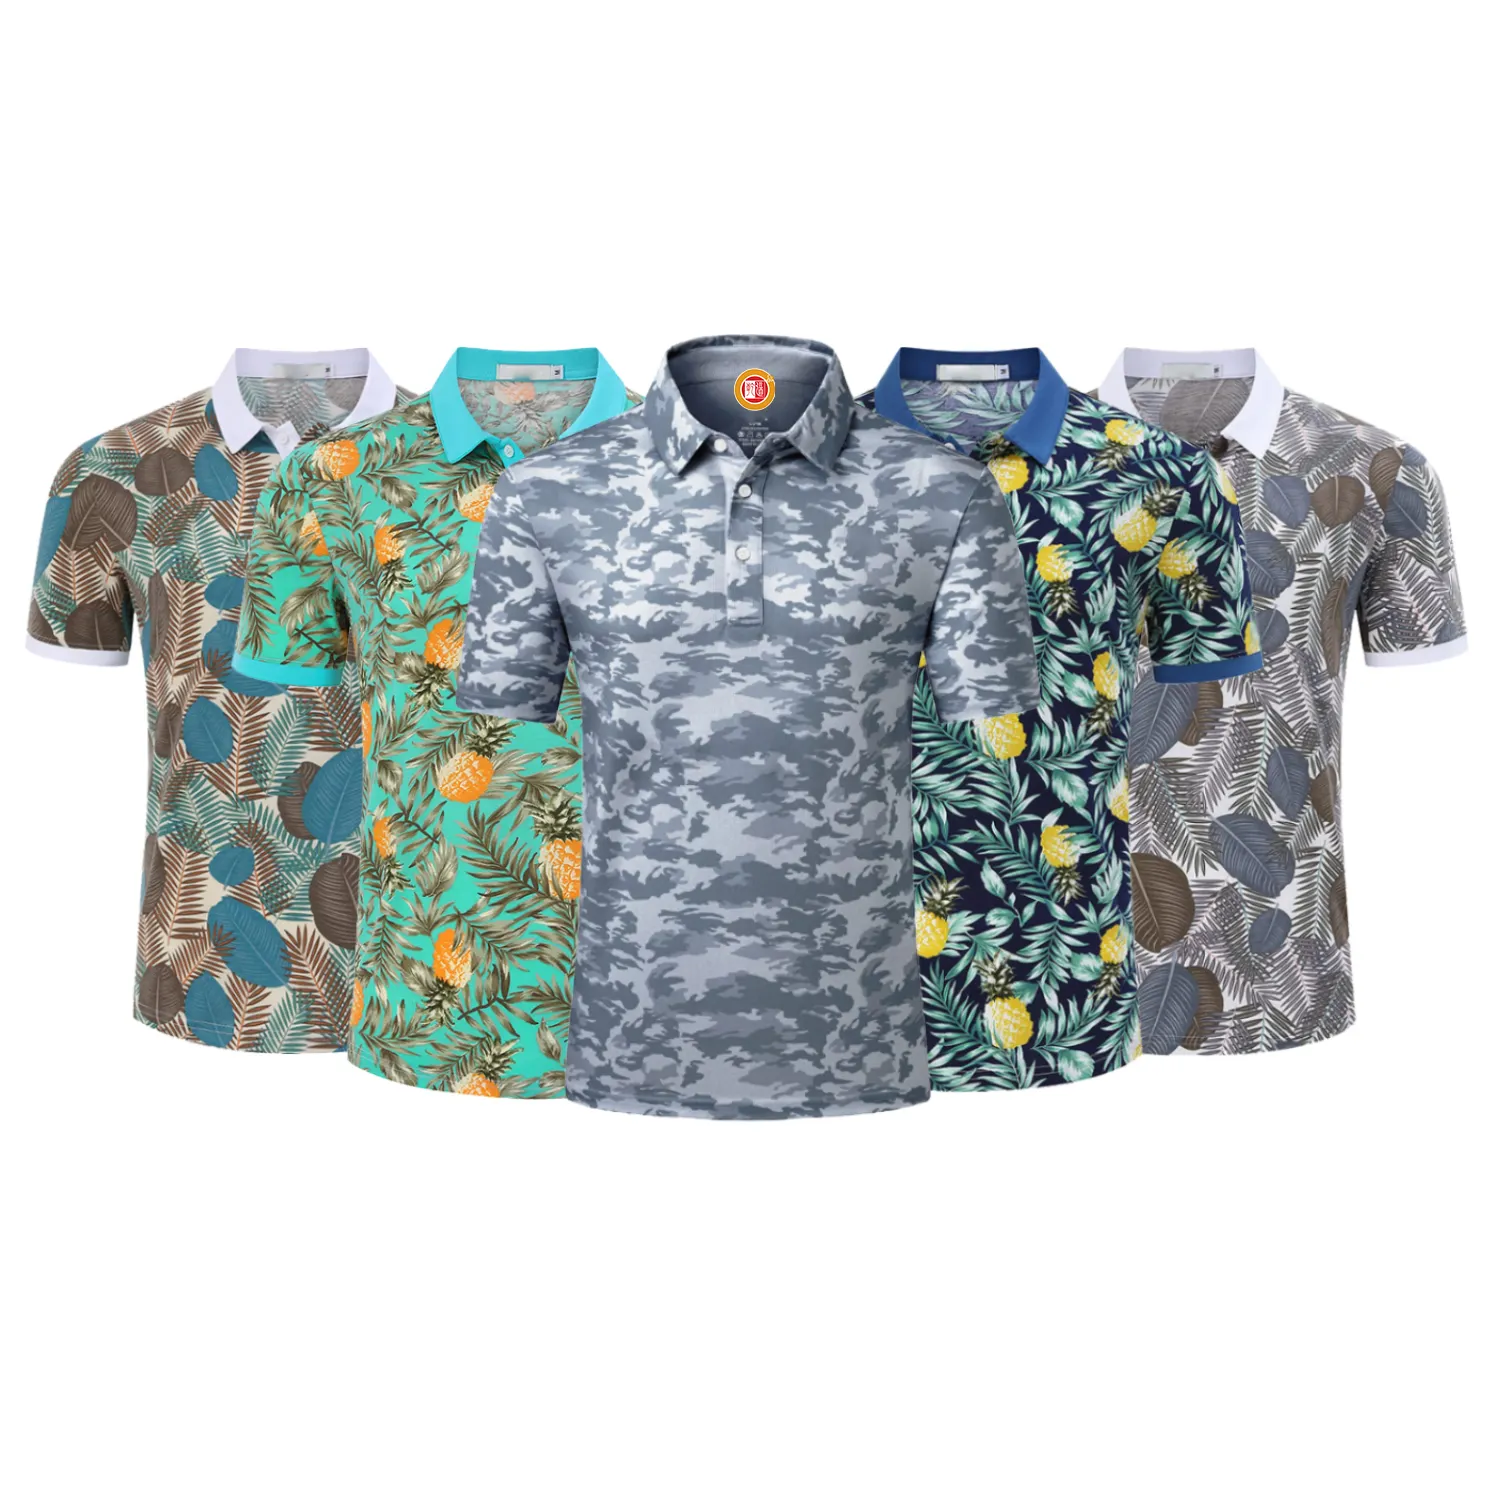 Custom logo 4 way stretch camo graphic luxury high quality quick dry golf wear summer casual fashion polo t shirt men